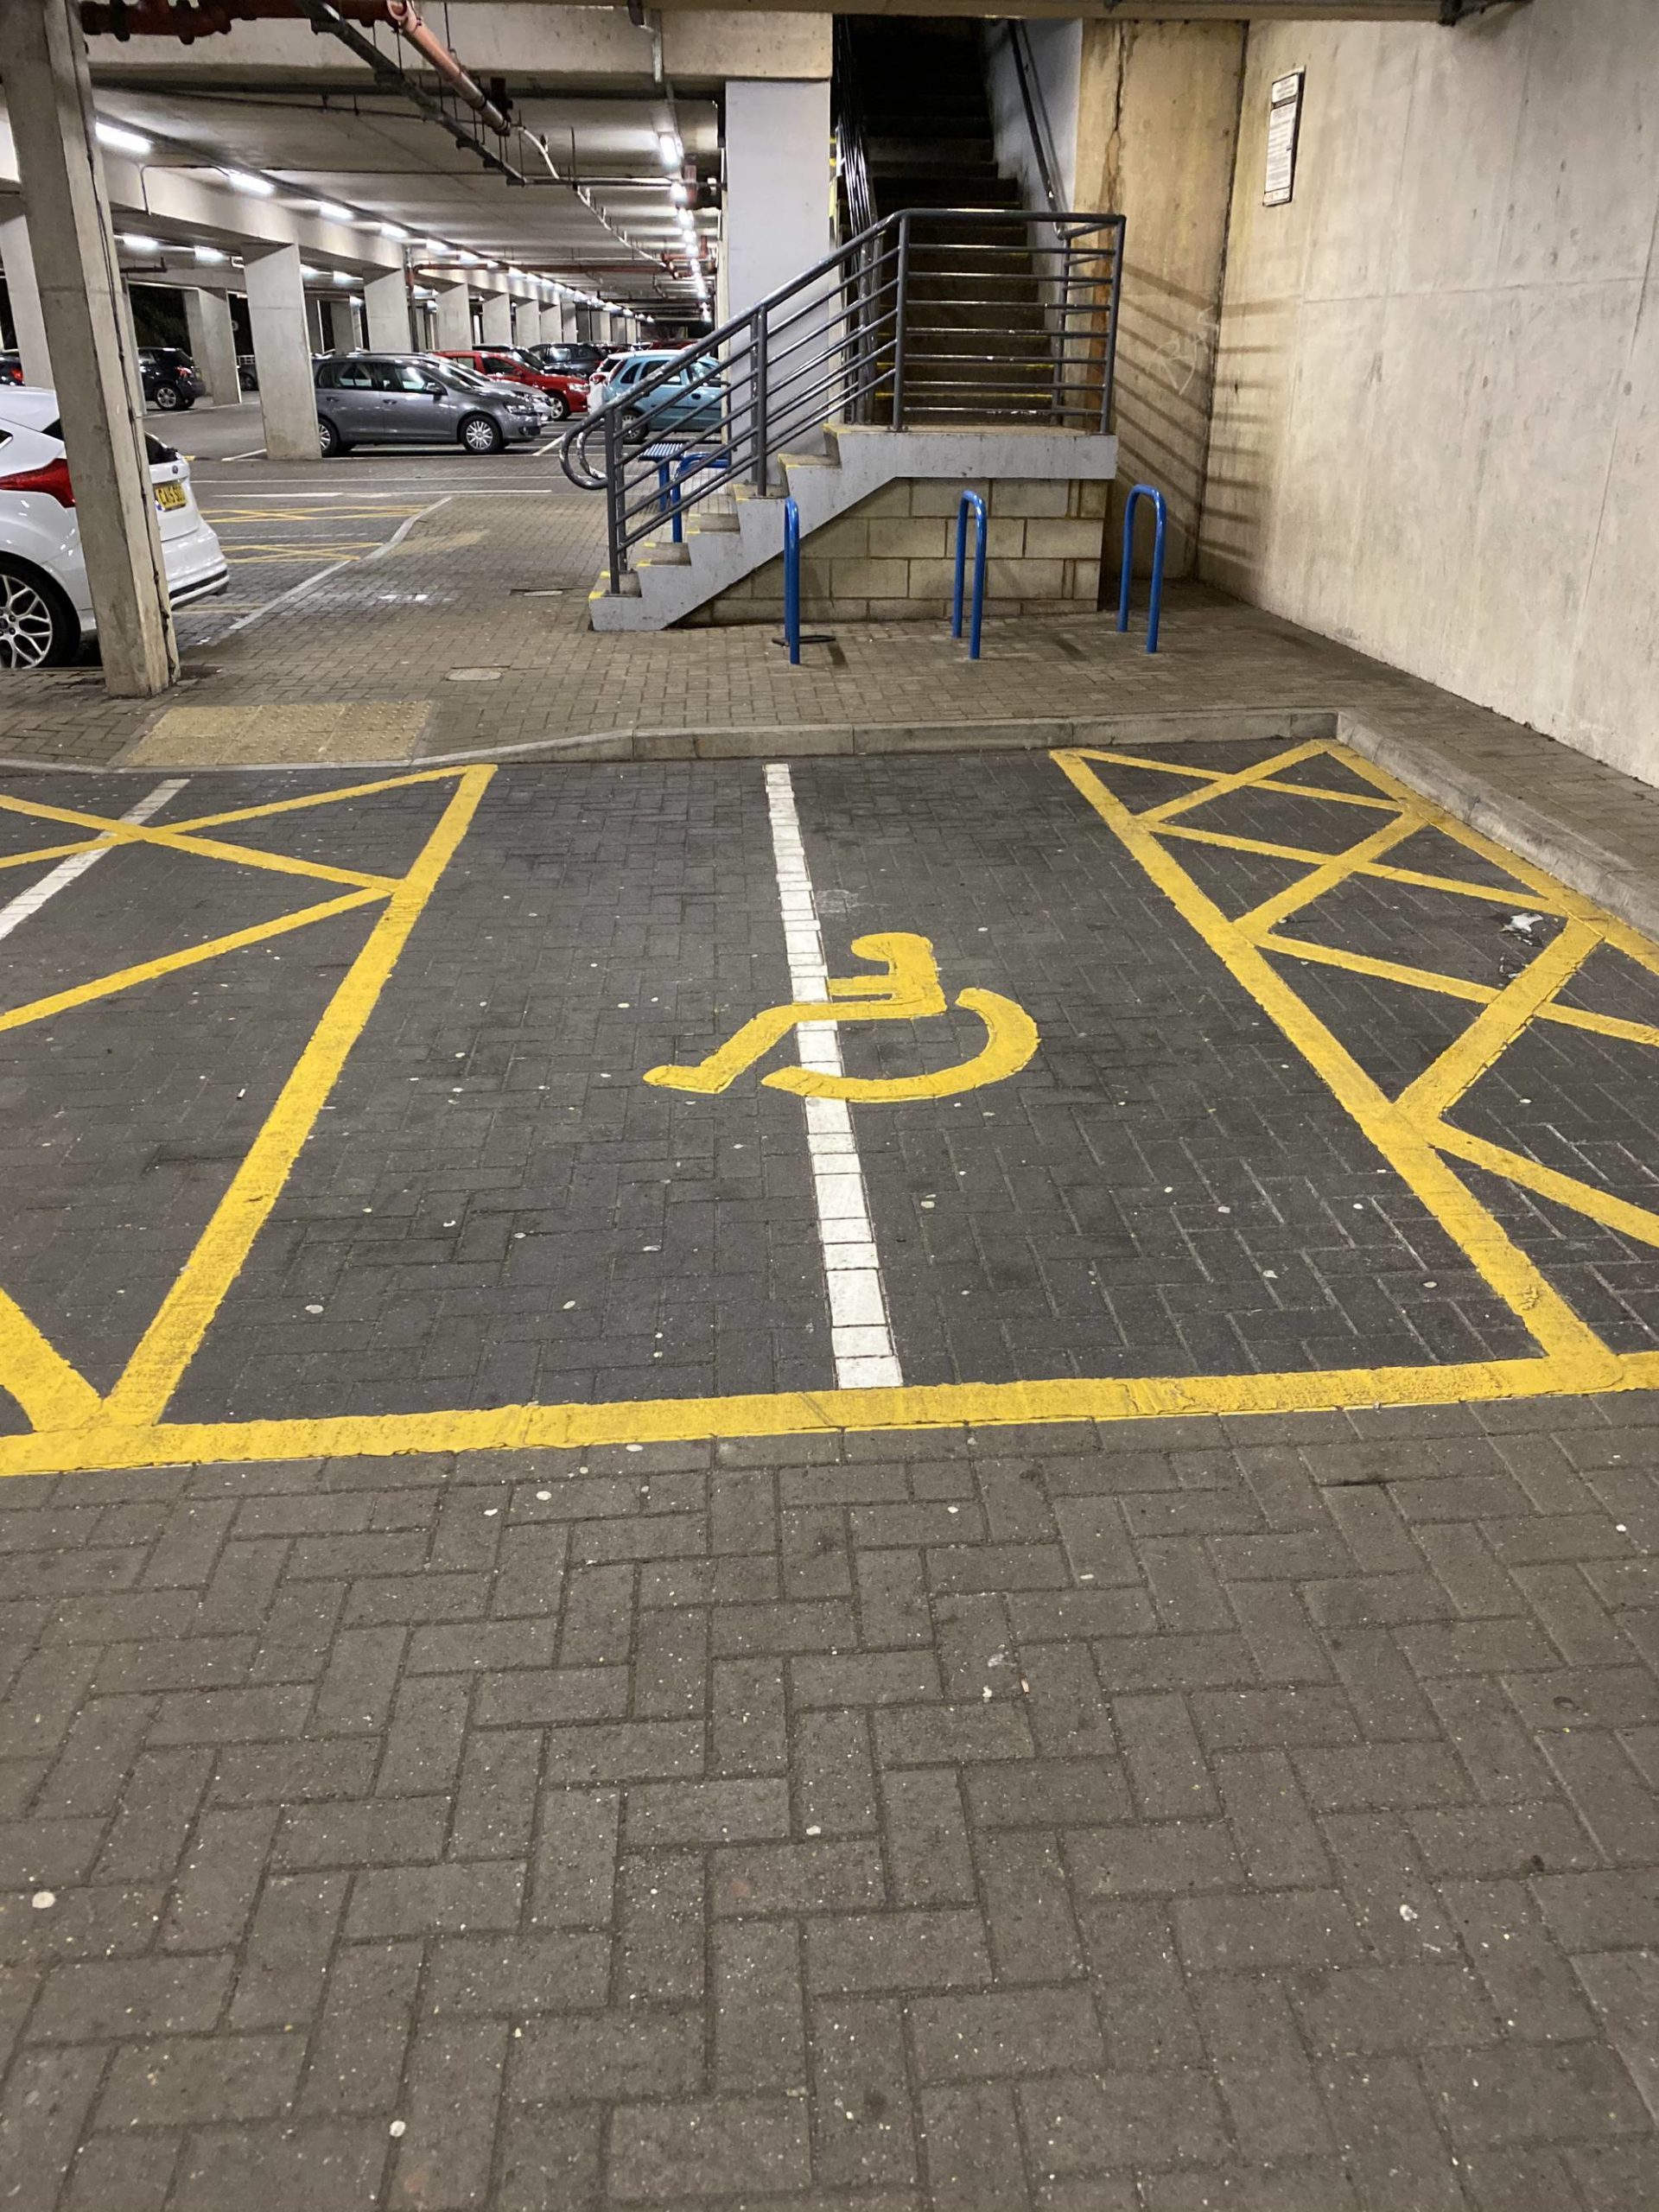 Parking+spot+for+disabled+pole-dancers